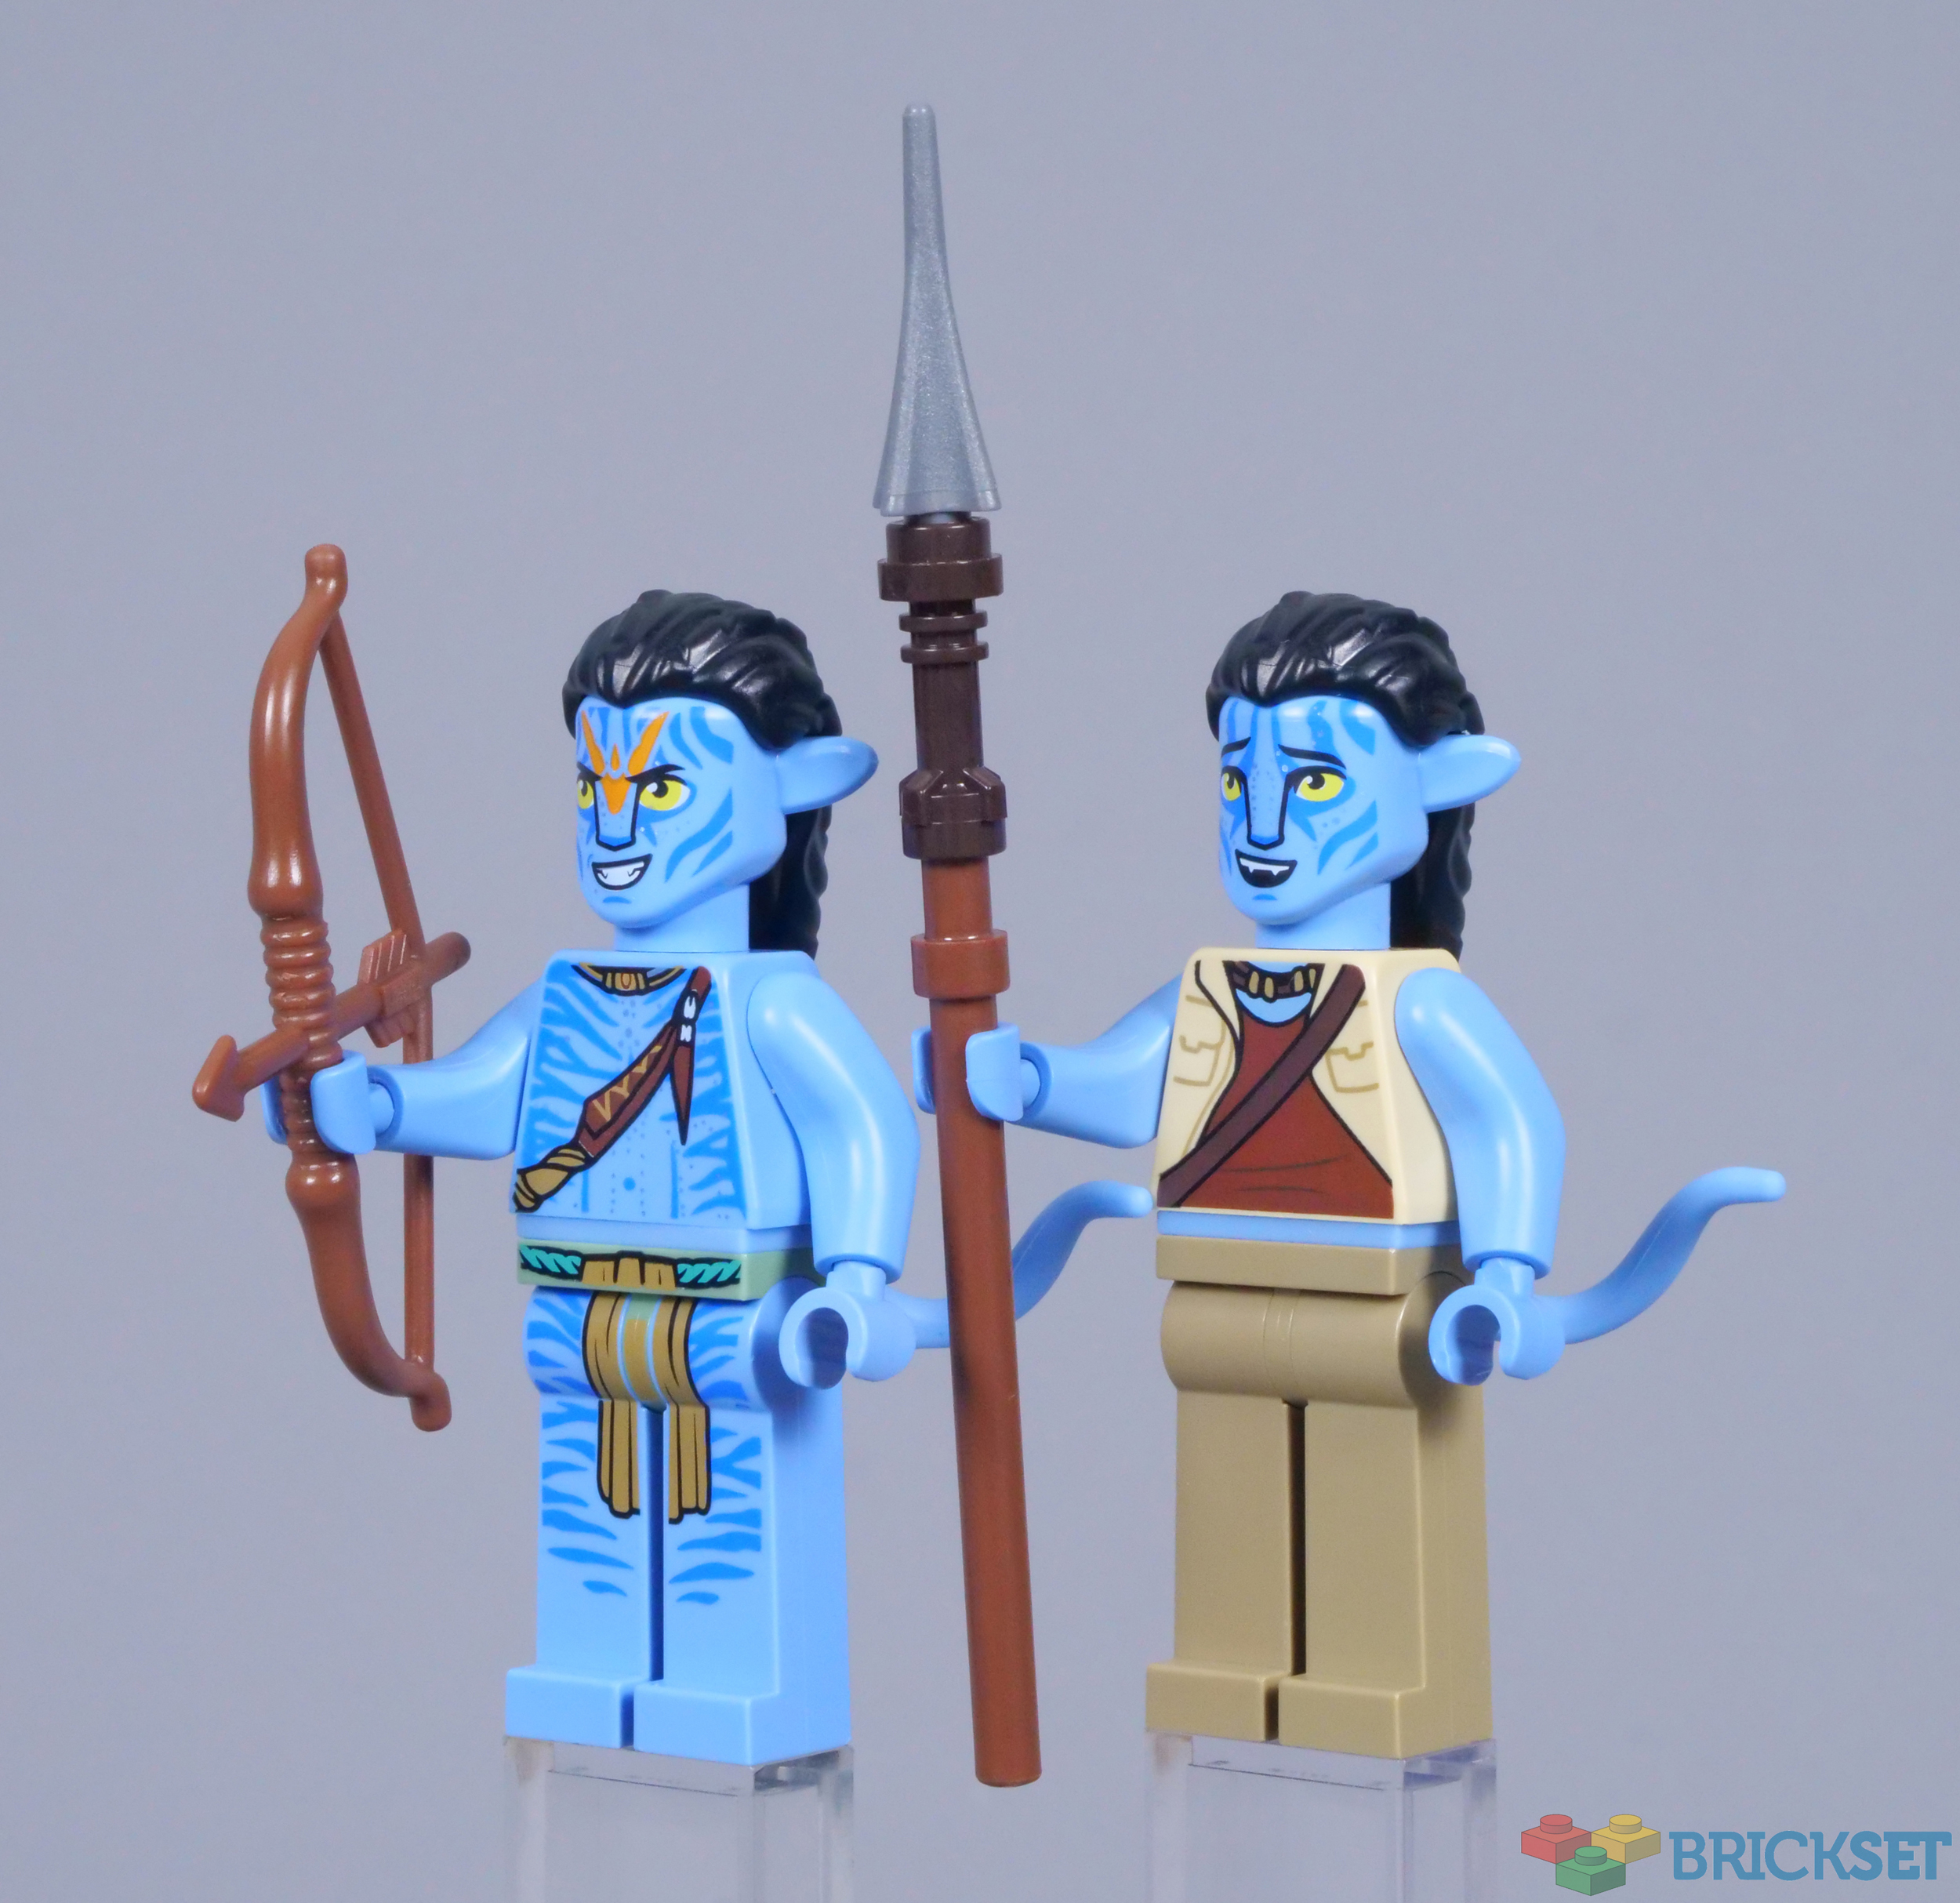 LEGO Avatar Norm Spellman Avatar Form Minifigure from 75573 - The